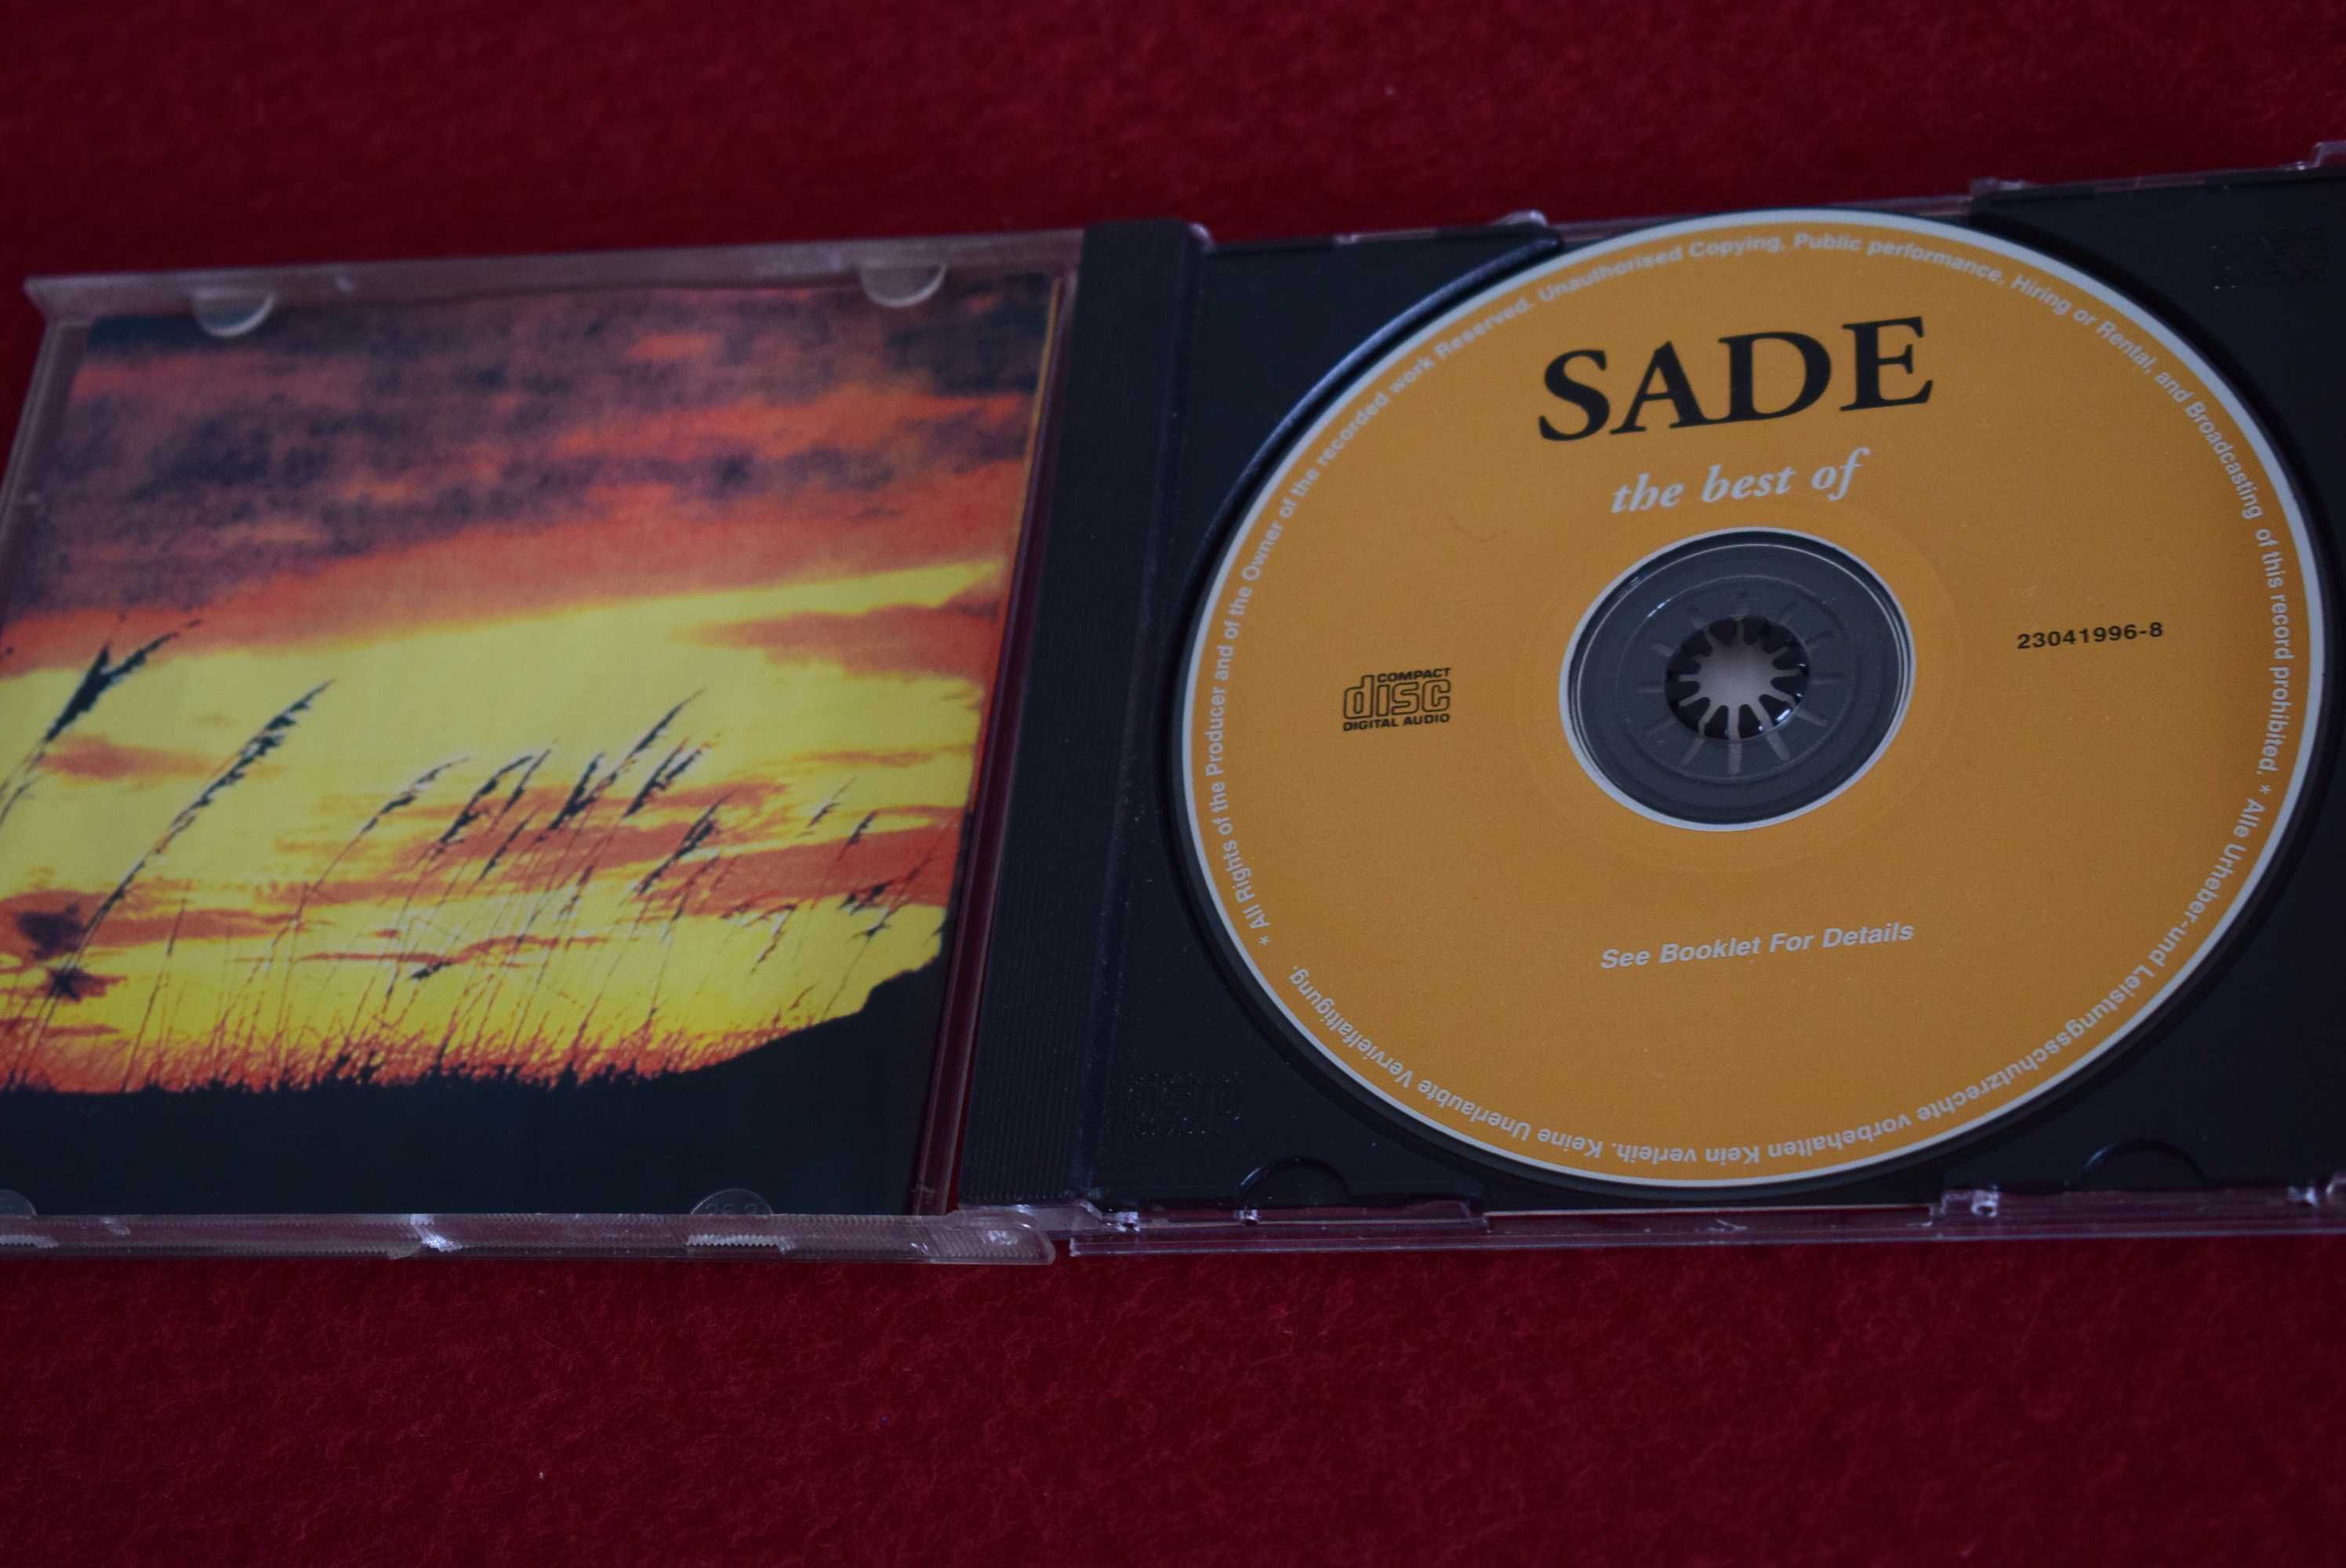 SADE - The best - płyta cd .